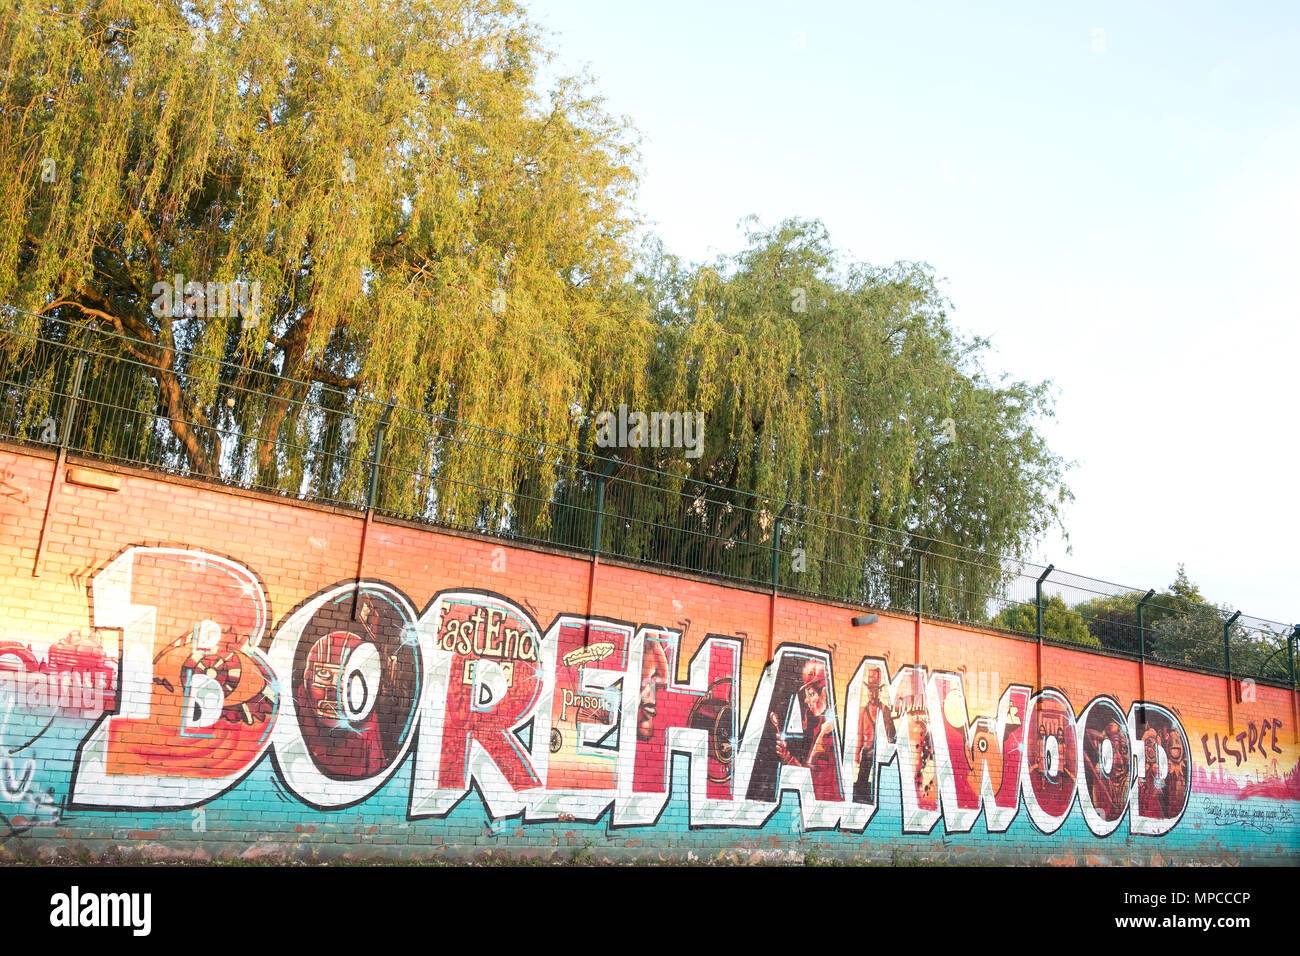 UK, Borehamwood, graffiti art in the basket ball courts at Aberford Park. Stock Photo